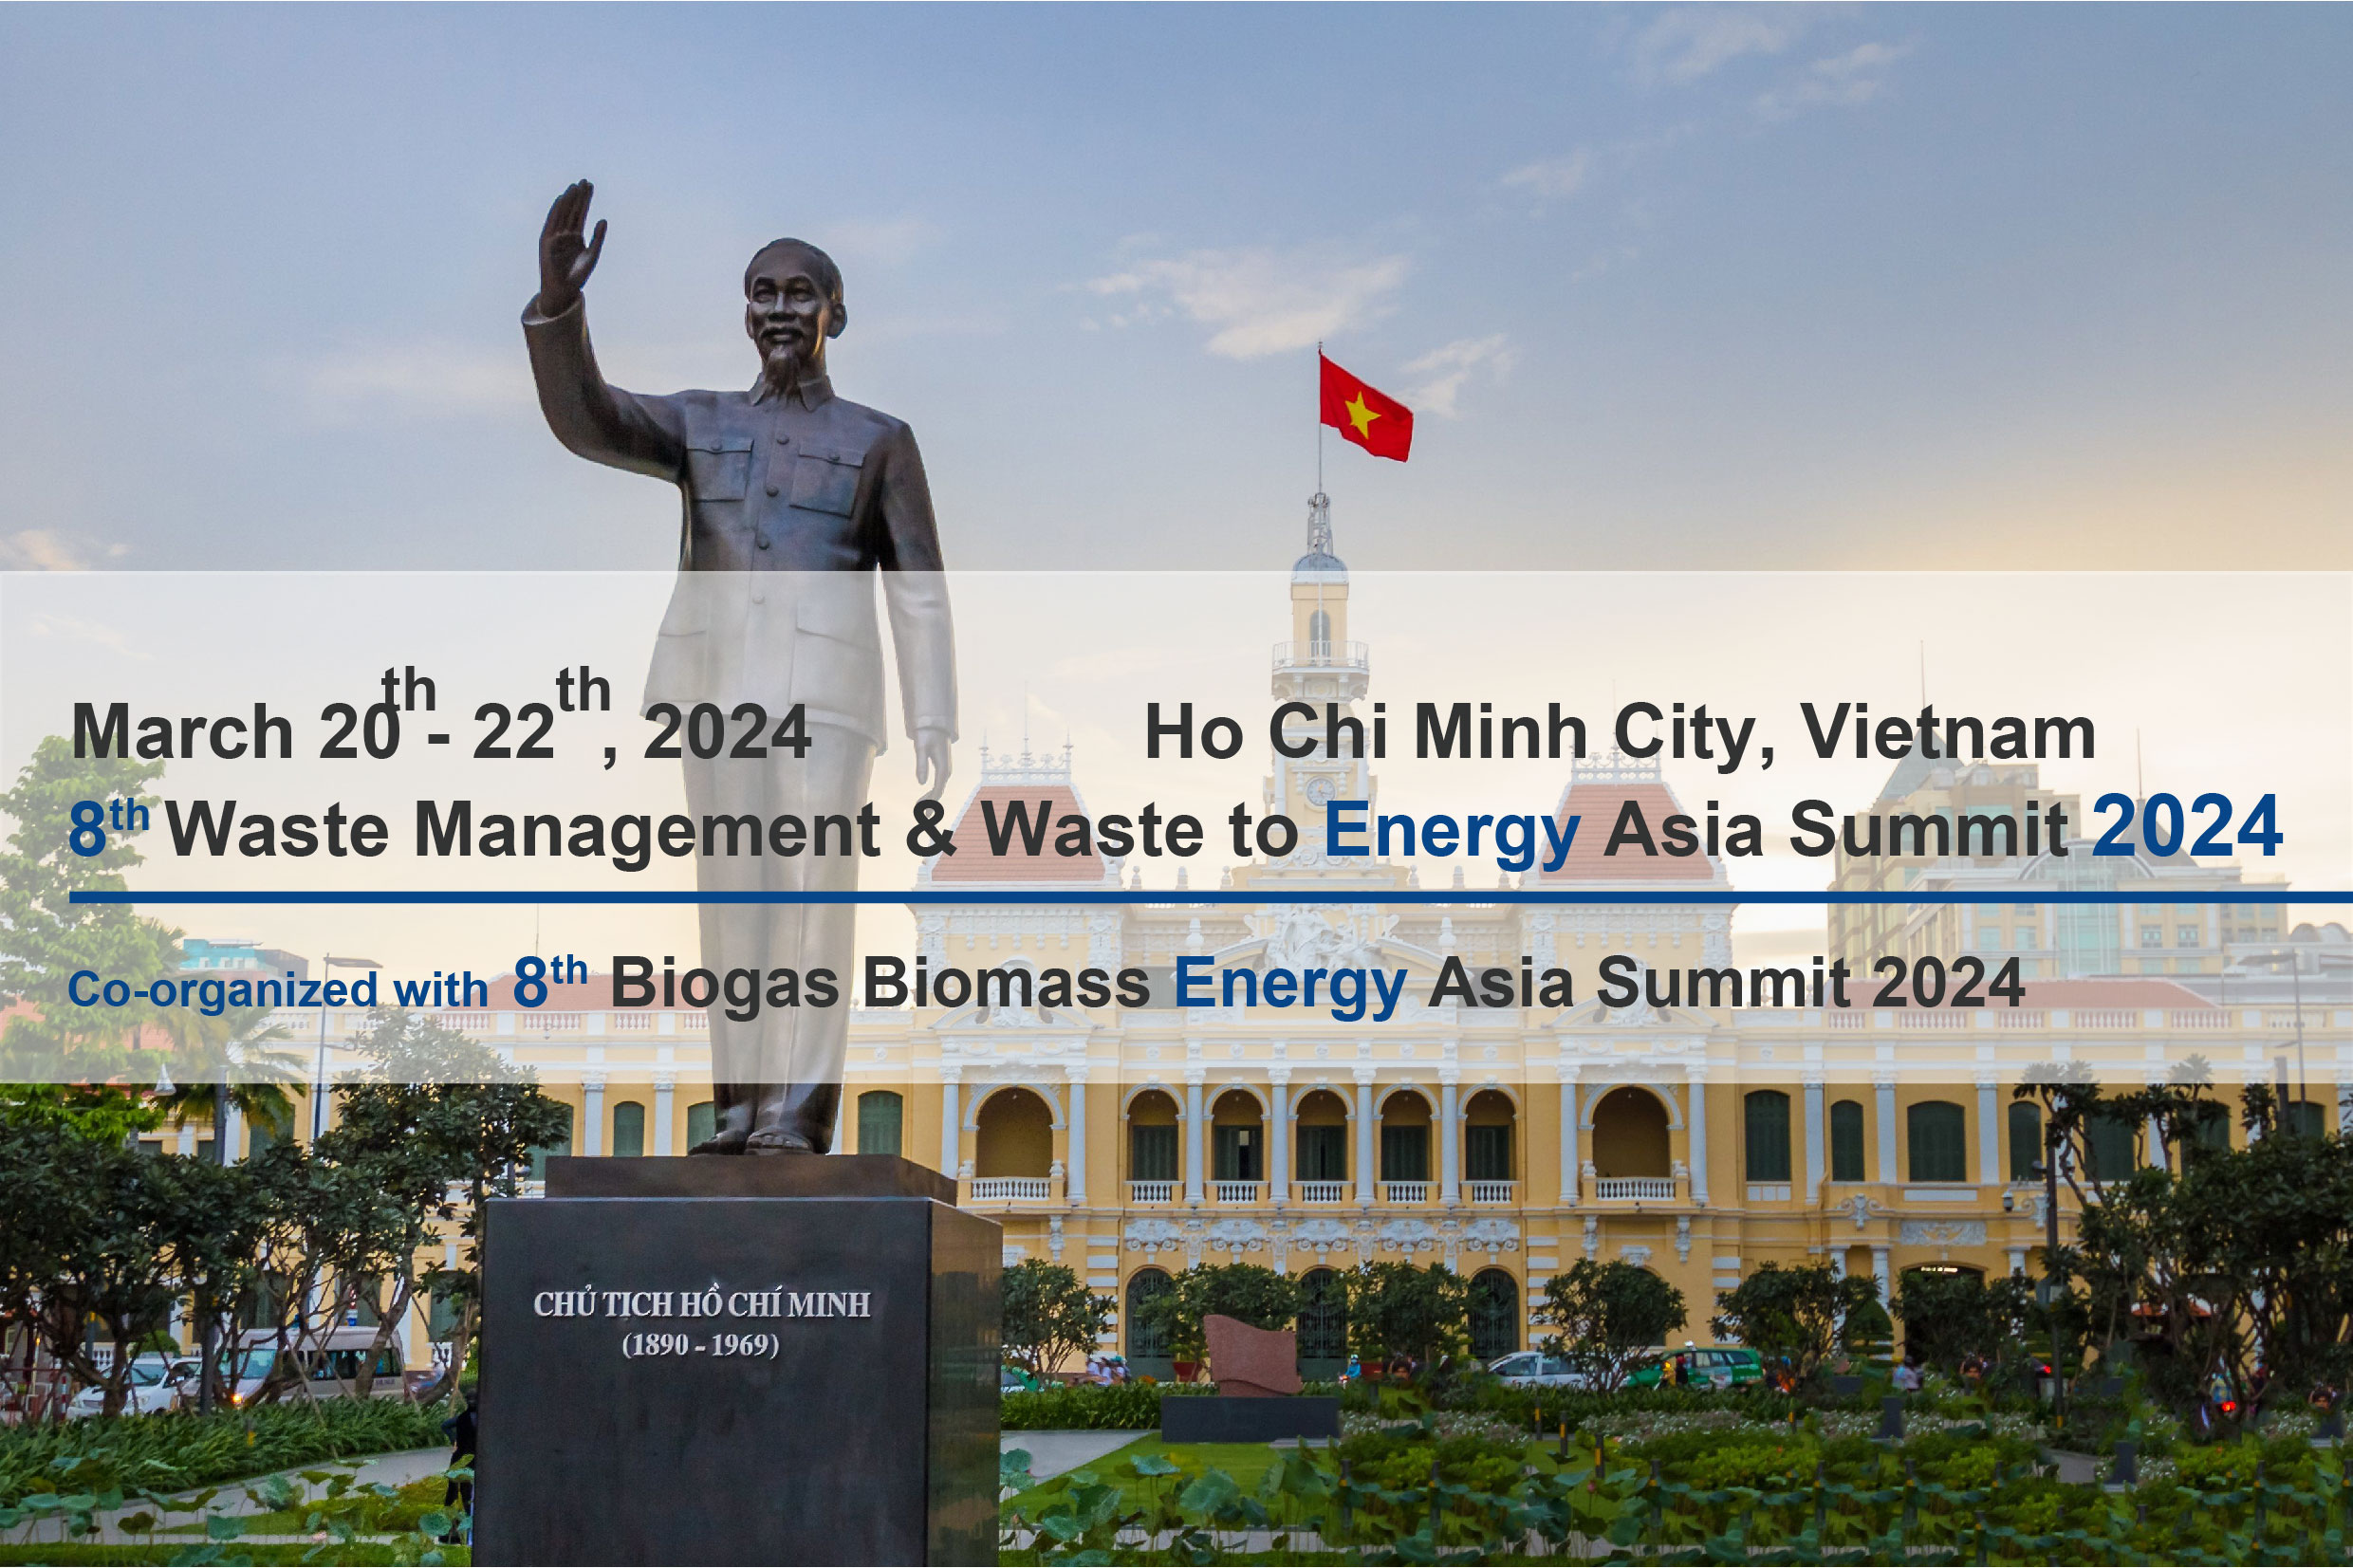 Waste to Energy Asia Summit 2024 Vietnam Focus